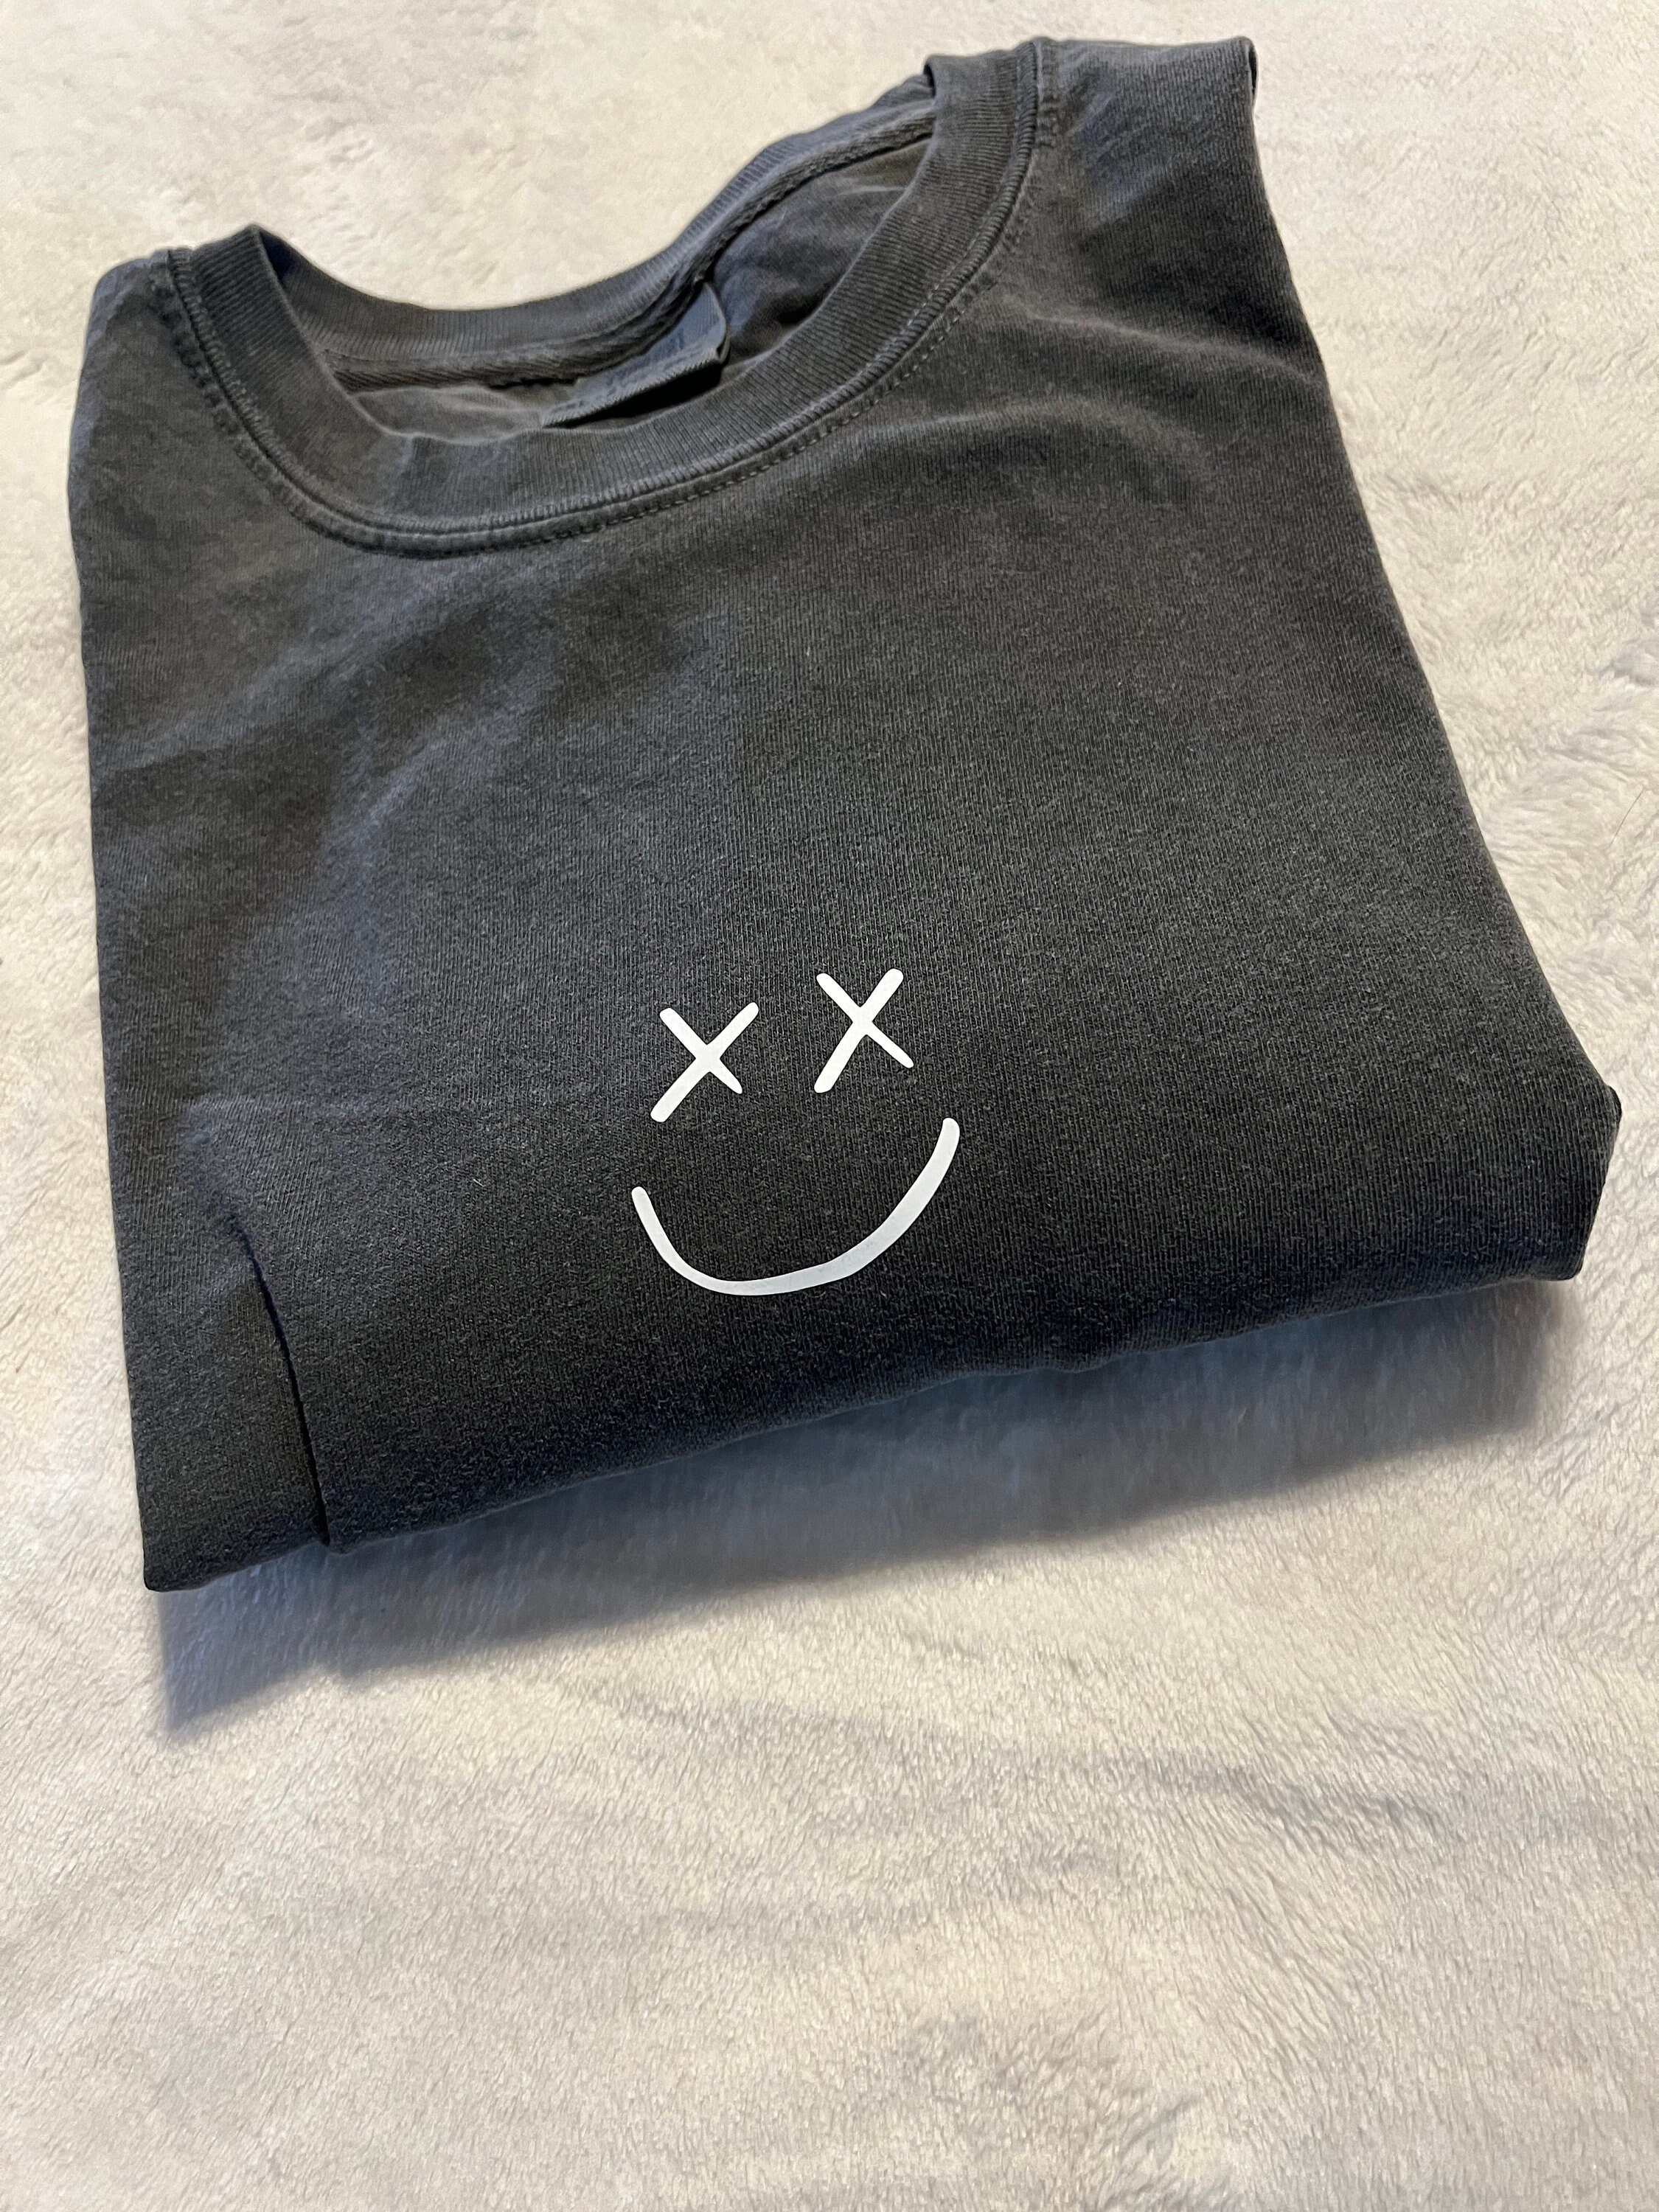 Louis Tomlinson World Tour Design Unisex Shirt – Teepital – Everyday New  Aesthetic Designs